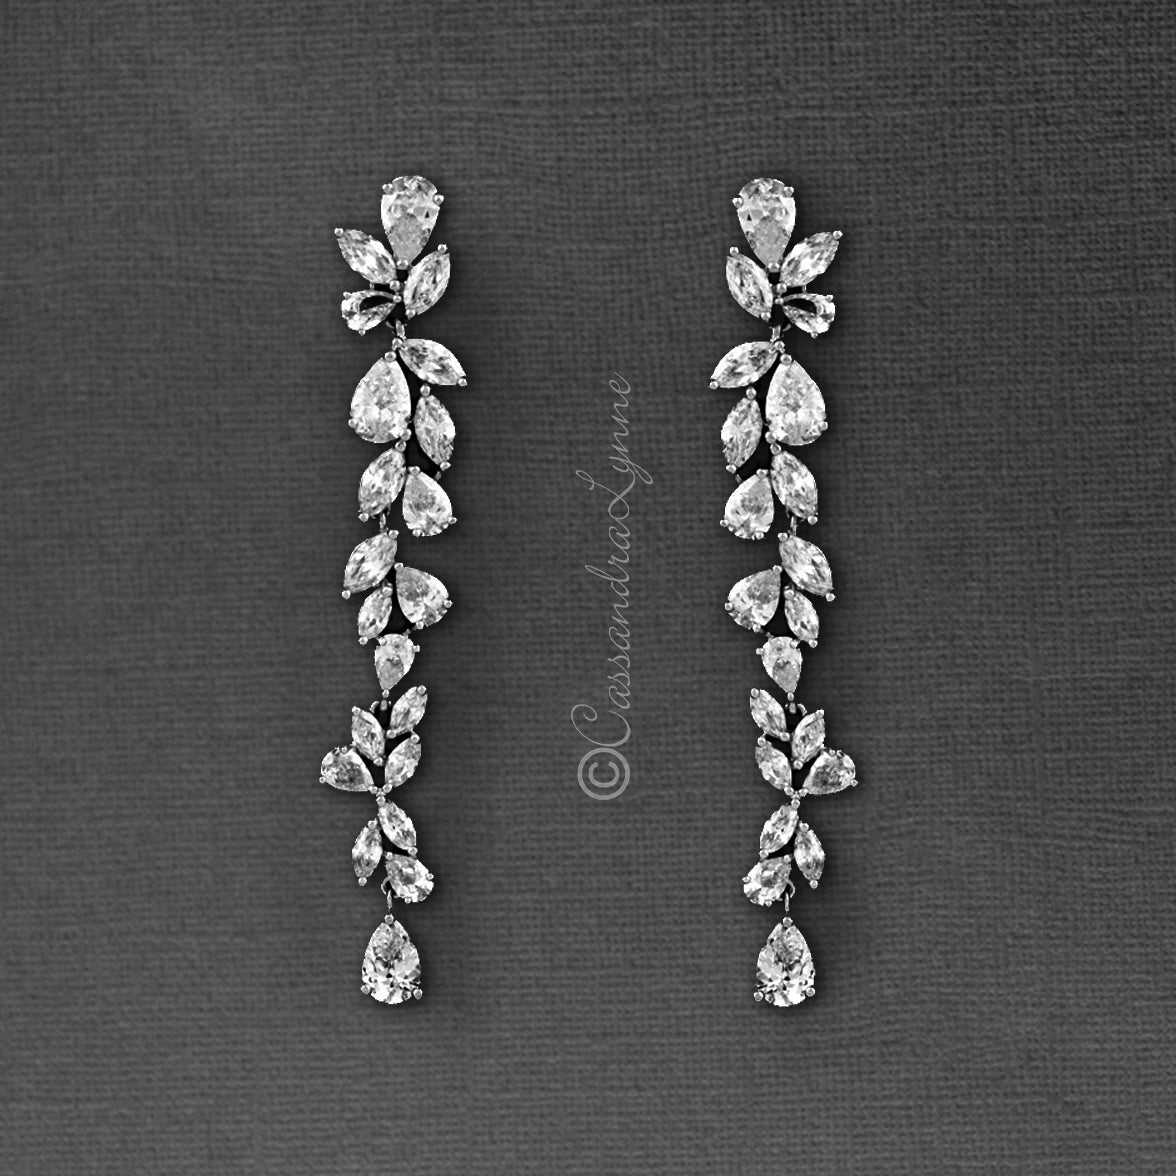 Long Bridal Earrings of Teardrop and Marquise CZ - Cassandra Lynne